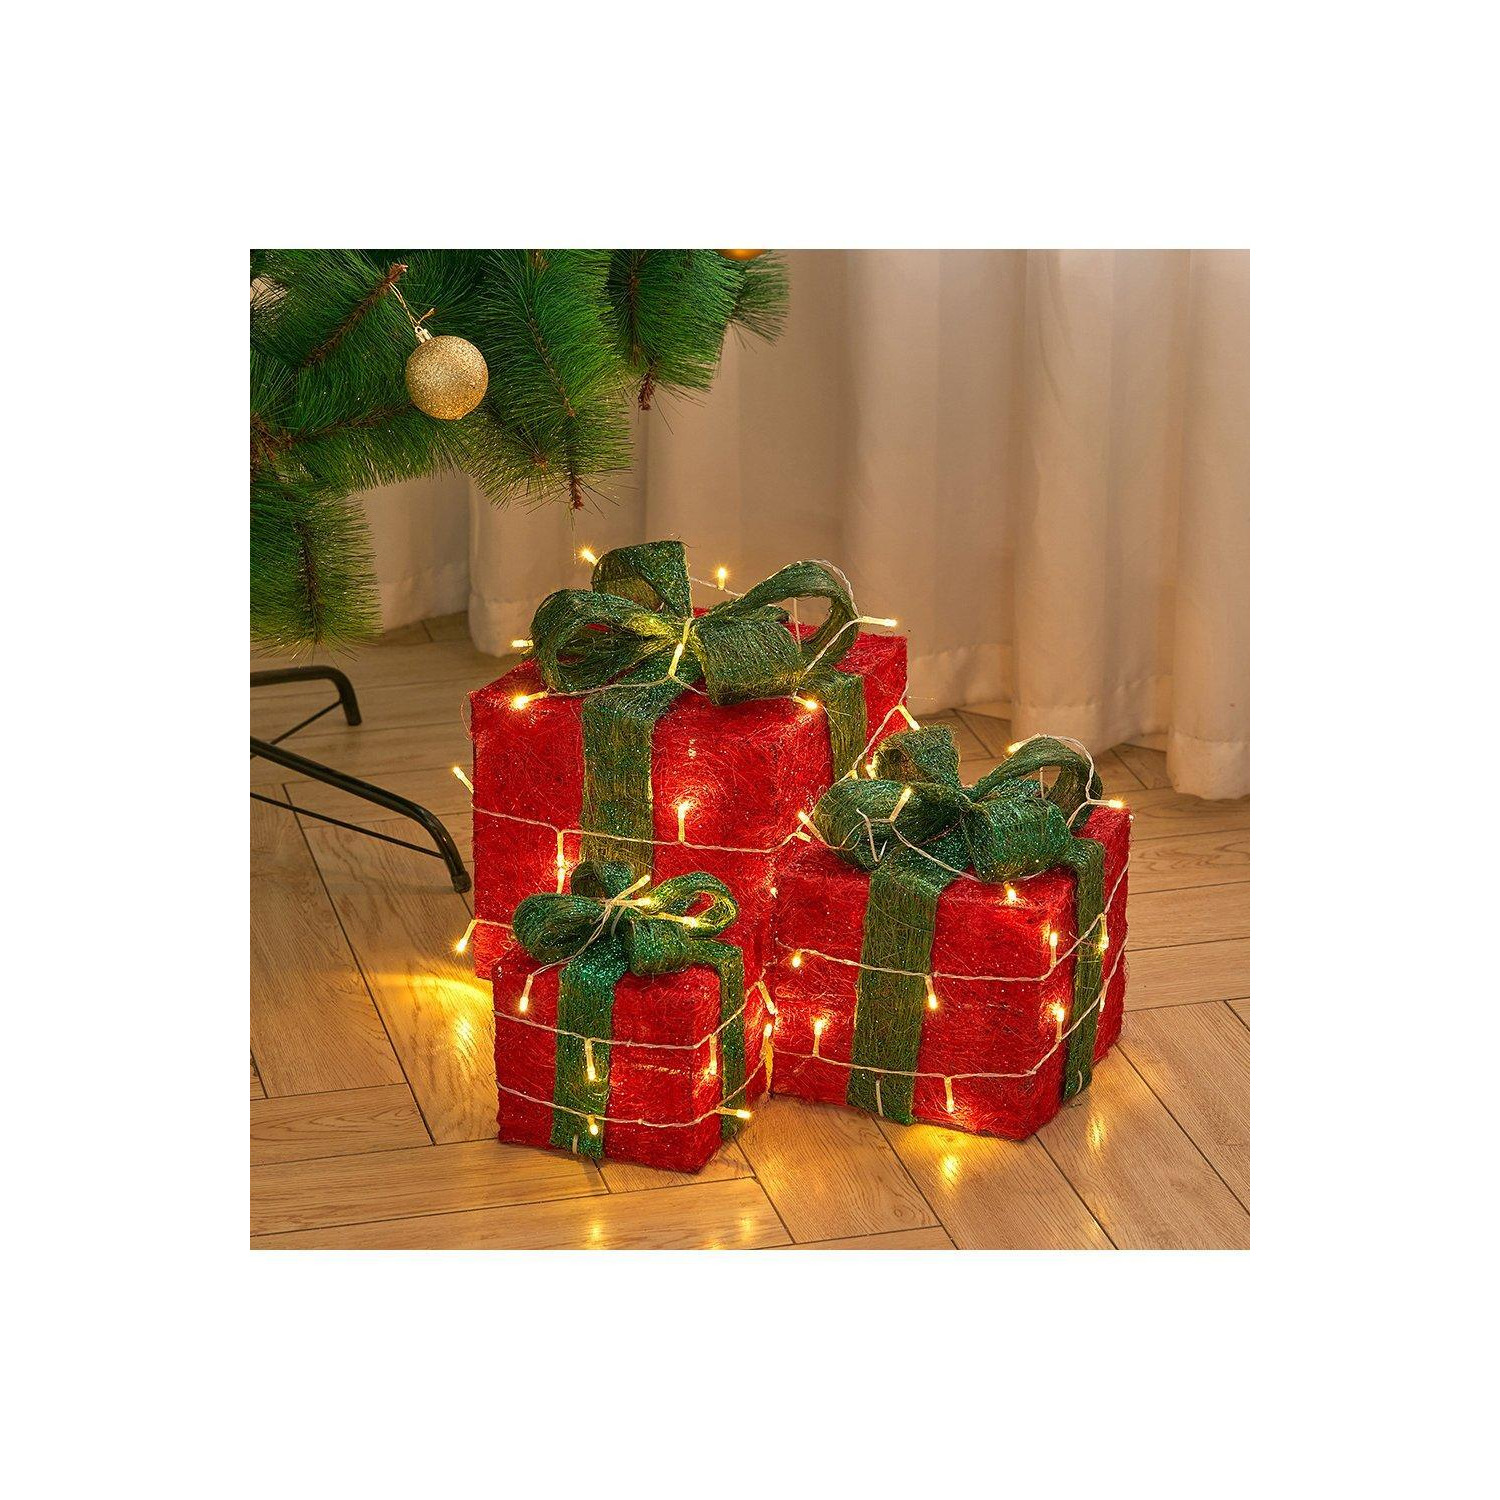 3Packs Christmas Ornament Decorative Lighted Gift Boxes Xmas Tree Decor - image 1